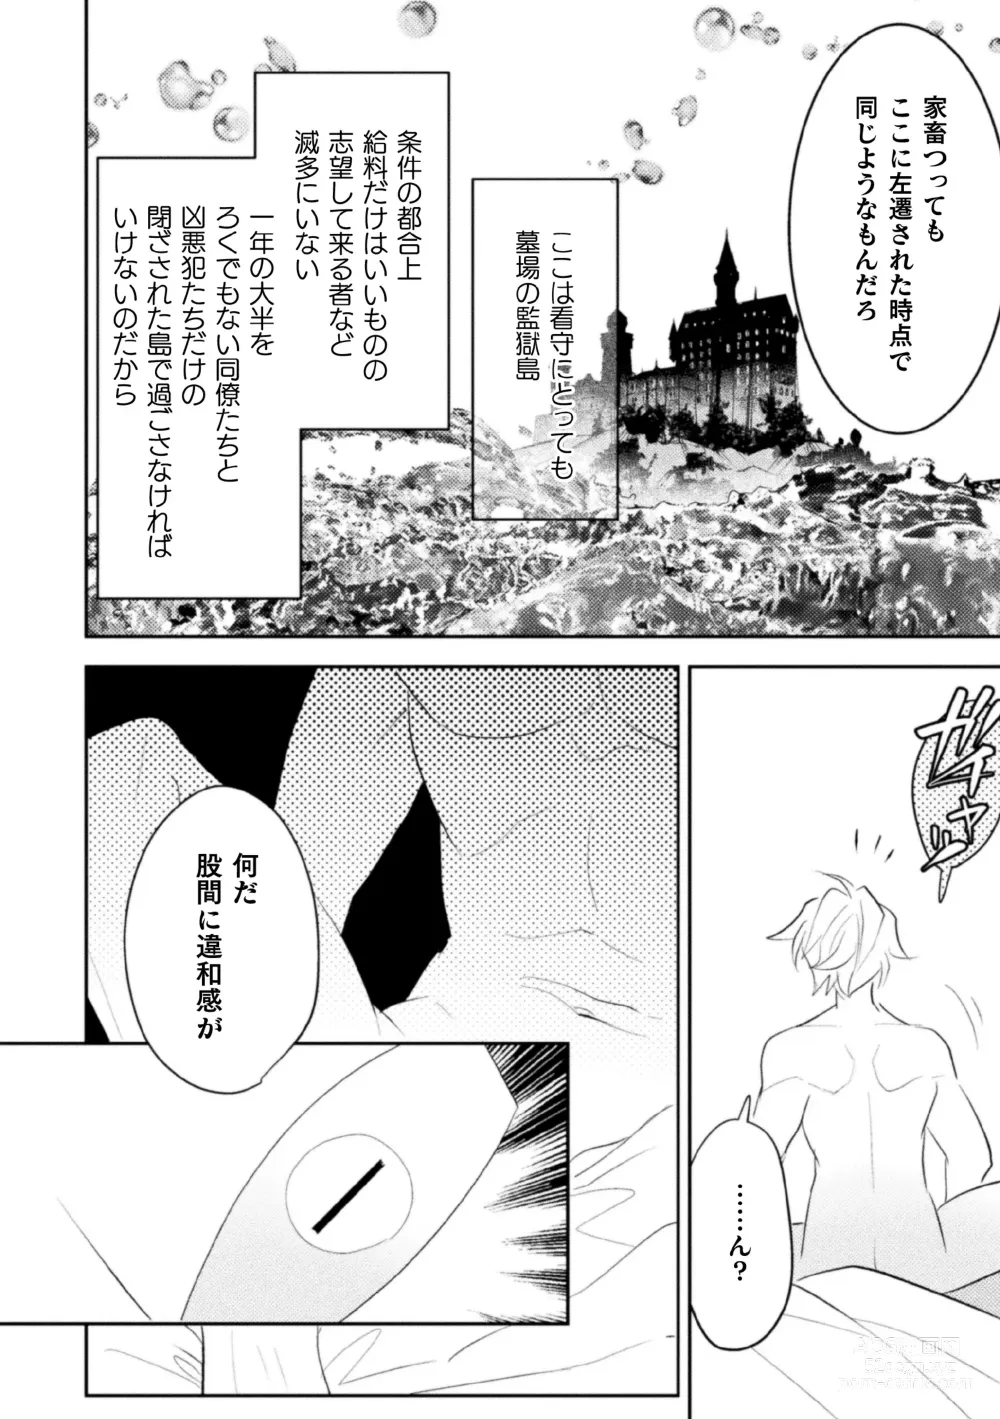 Page 4 of manga Zekkai Rougoku 4 Zekkai no Ori to Inma no Wana